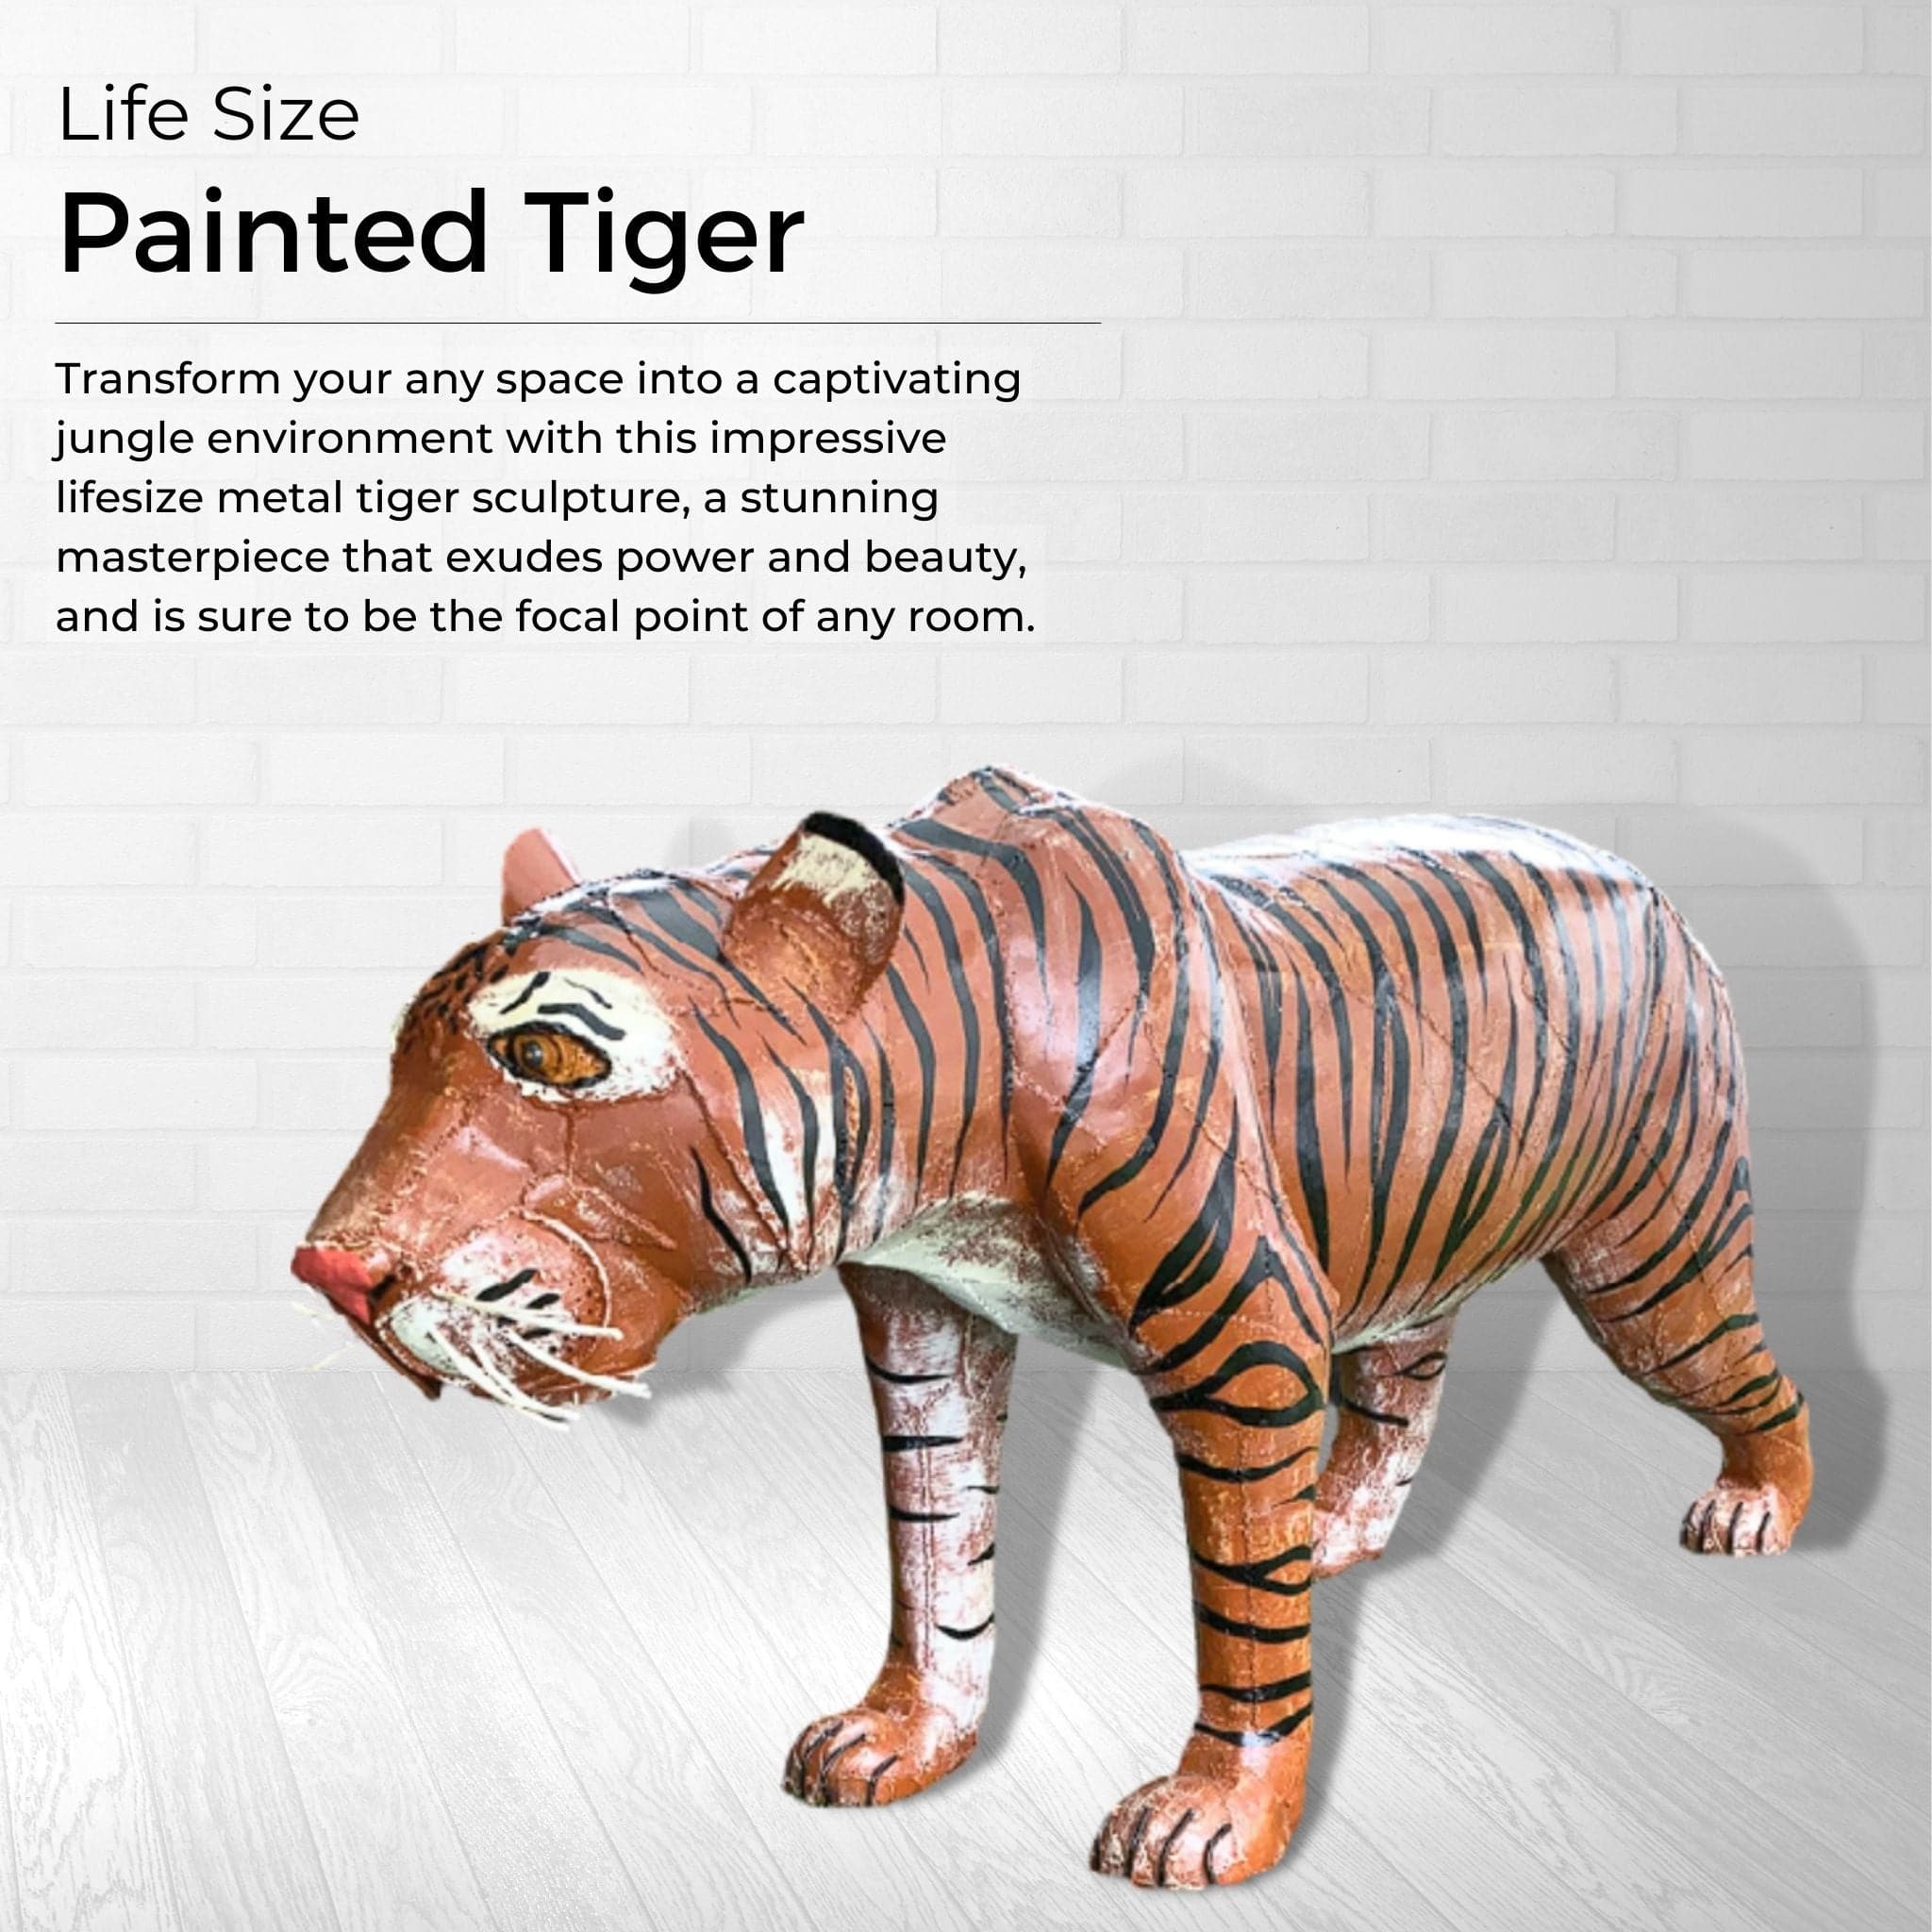 Painted Tiger - Pangea Sculptures